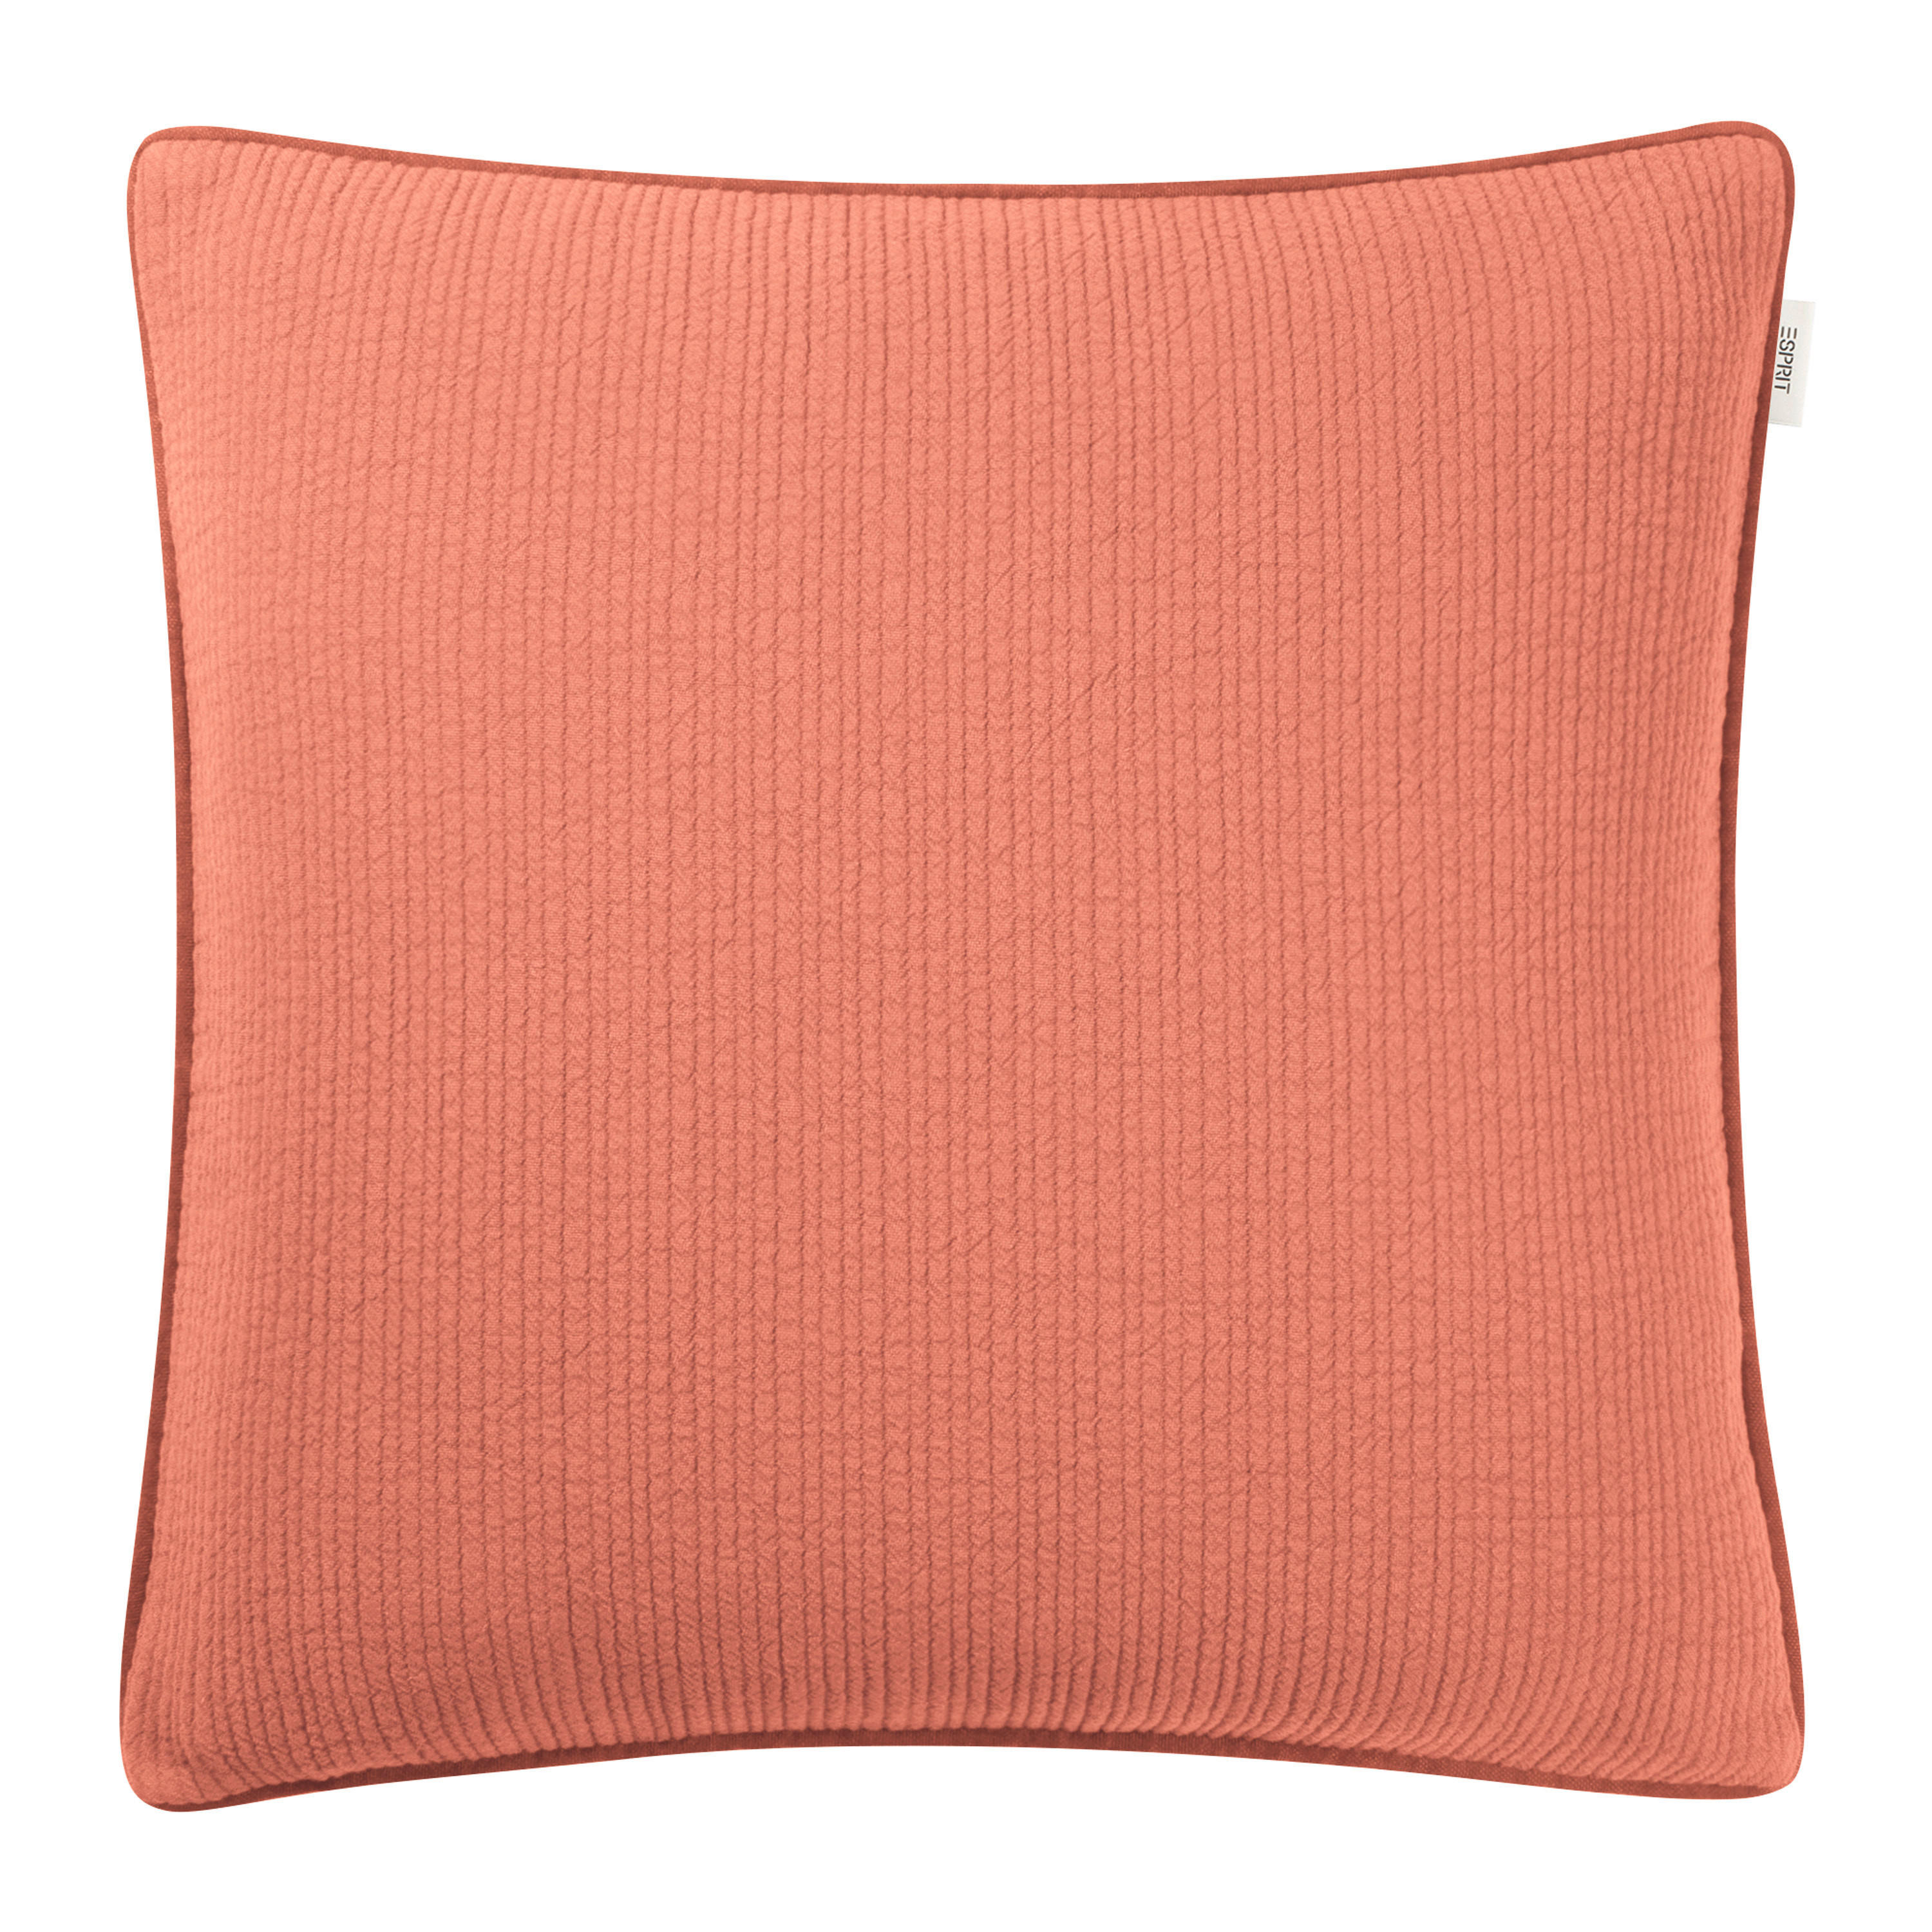 KISSENHÜLLE E-Amber 45/45 cm  - Terracotta/Orange, Basics, Textil (45/45cm) - Esprit